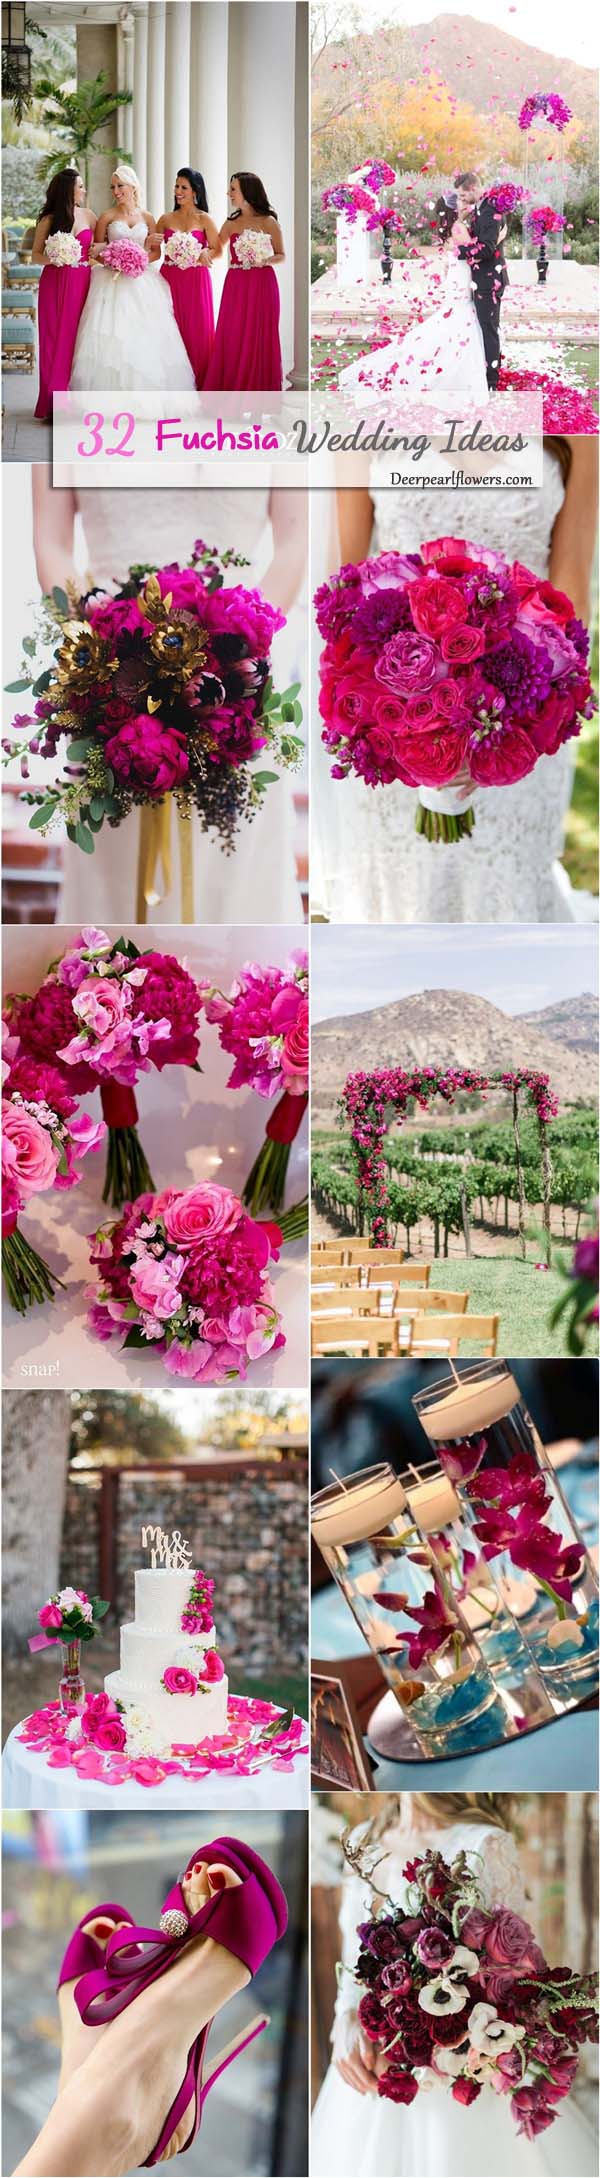 Fuchsia hot pink wedding color ideas